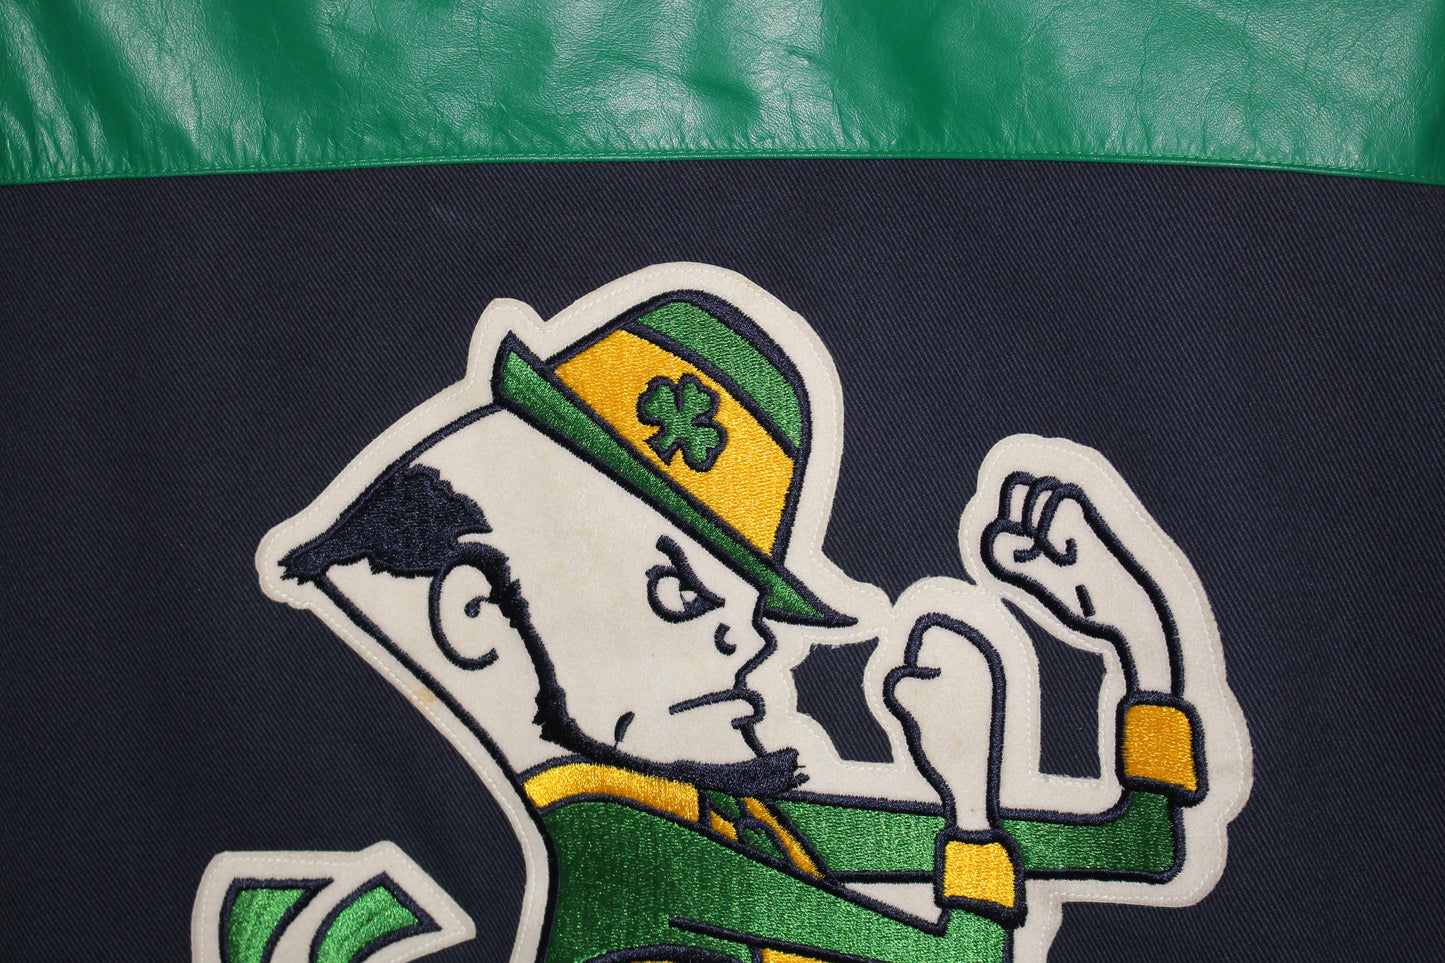 Notre Dame Fighting Irish JH Design (L)